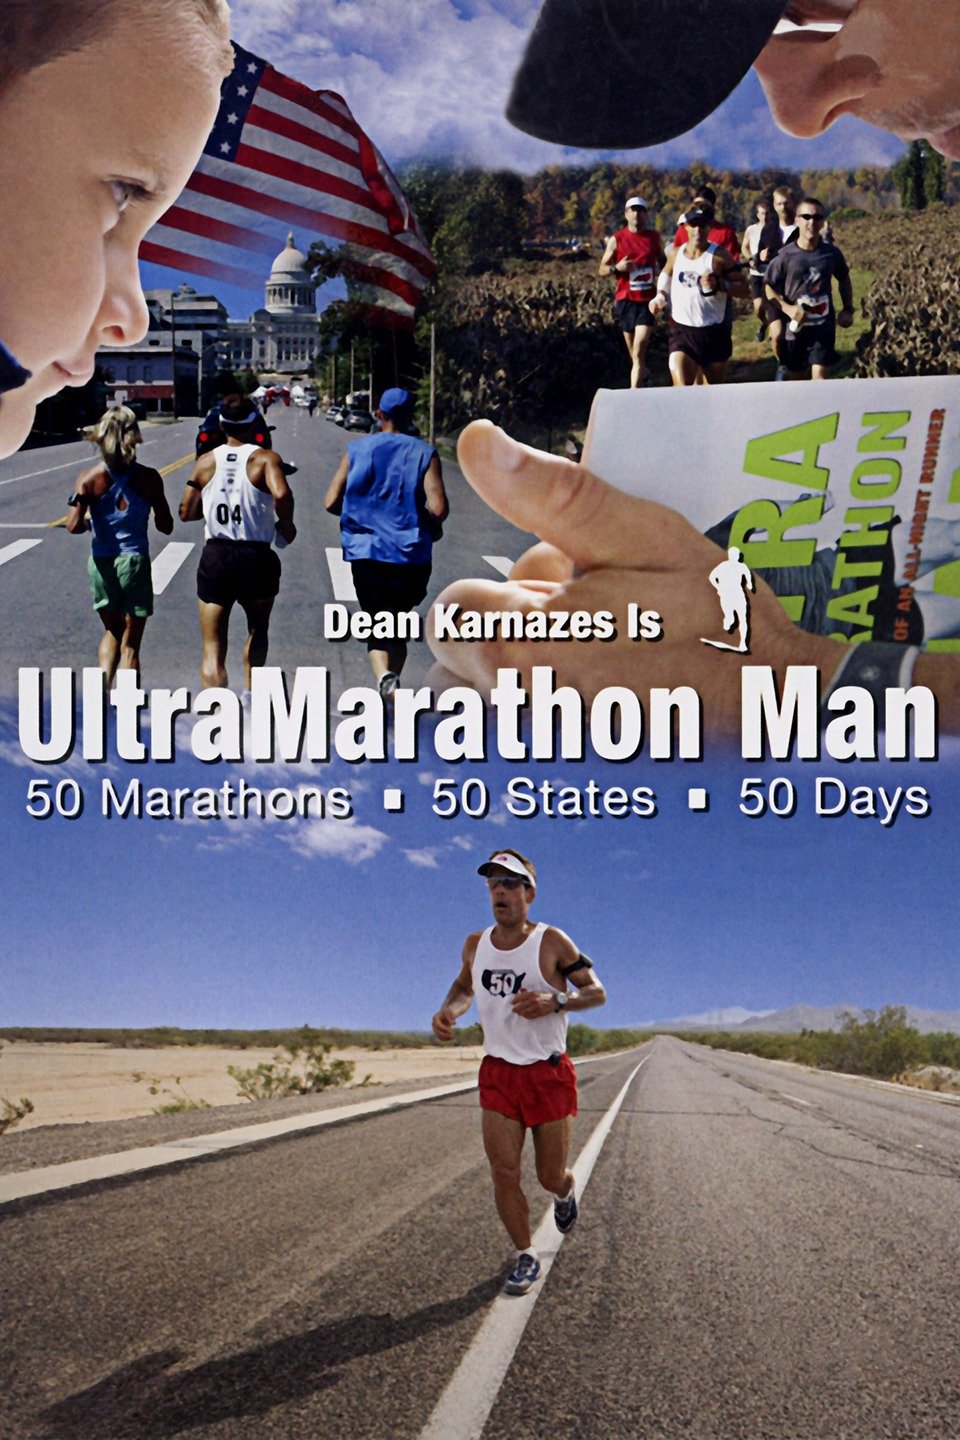 Ultramarathon Man 50 Marathons 50 States 50 Days Pictures Rotten Tomatoes 